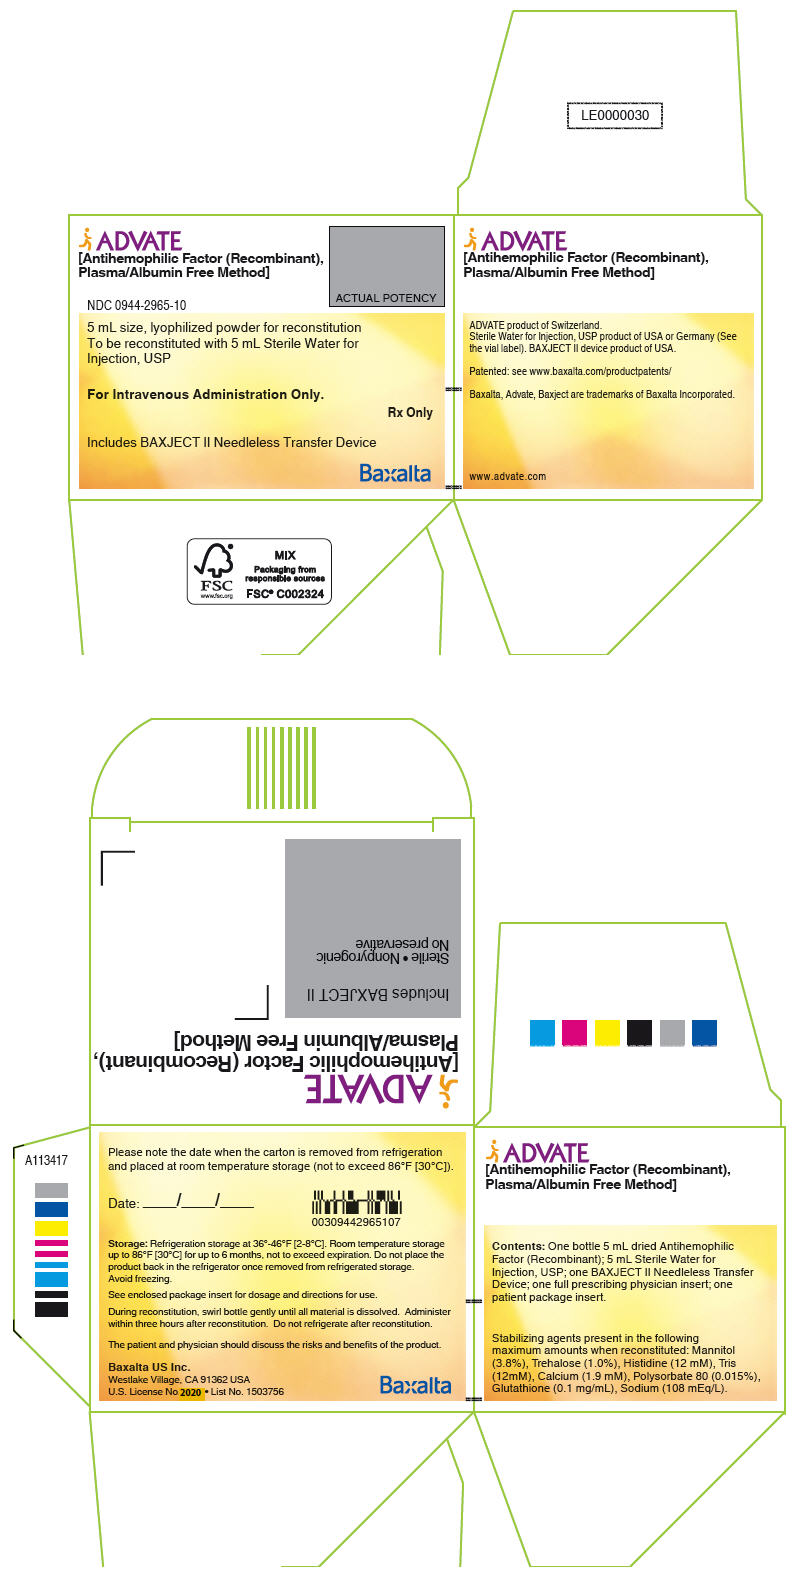 PRINCIPAL DISPLAY PANEL - Kit Carton - NDC 0944-2965-10